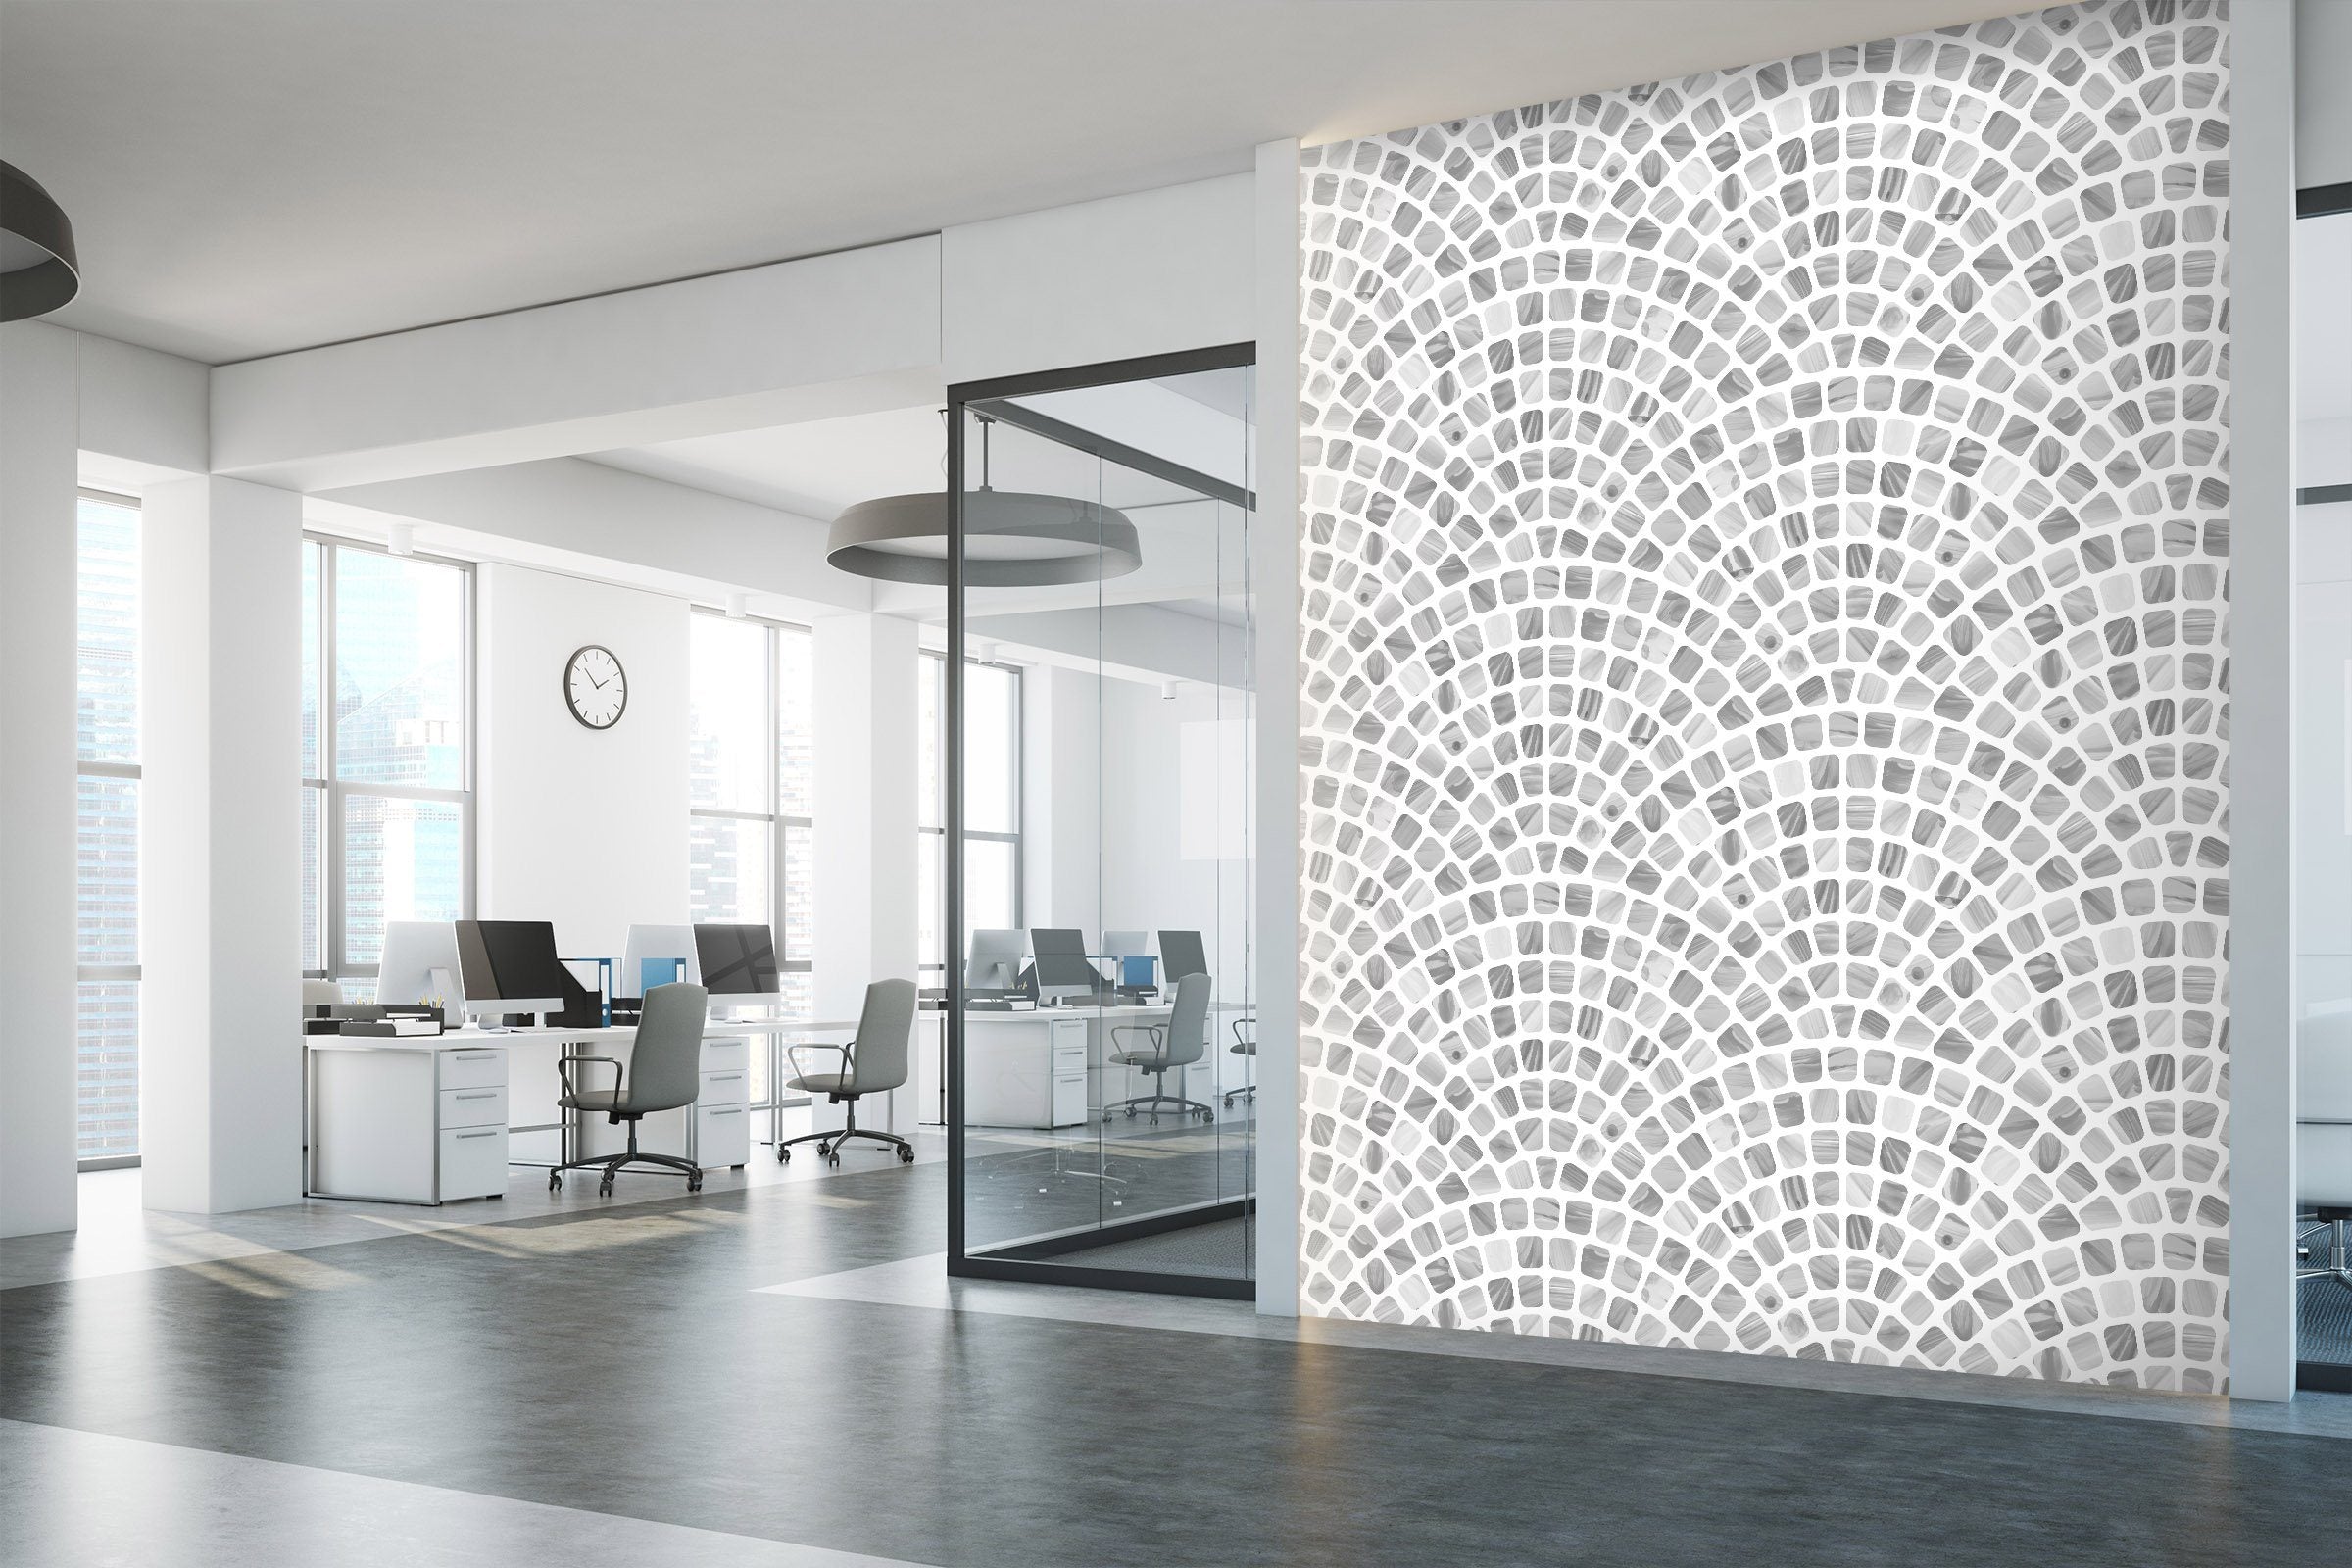 3D Sector Design 046 Marble Tile Texture Wallpaper AJ Wallpaper 2 